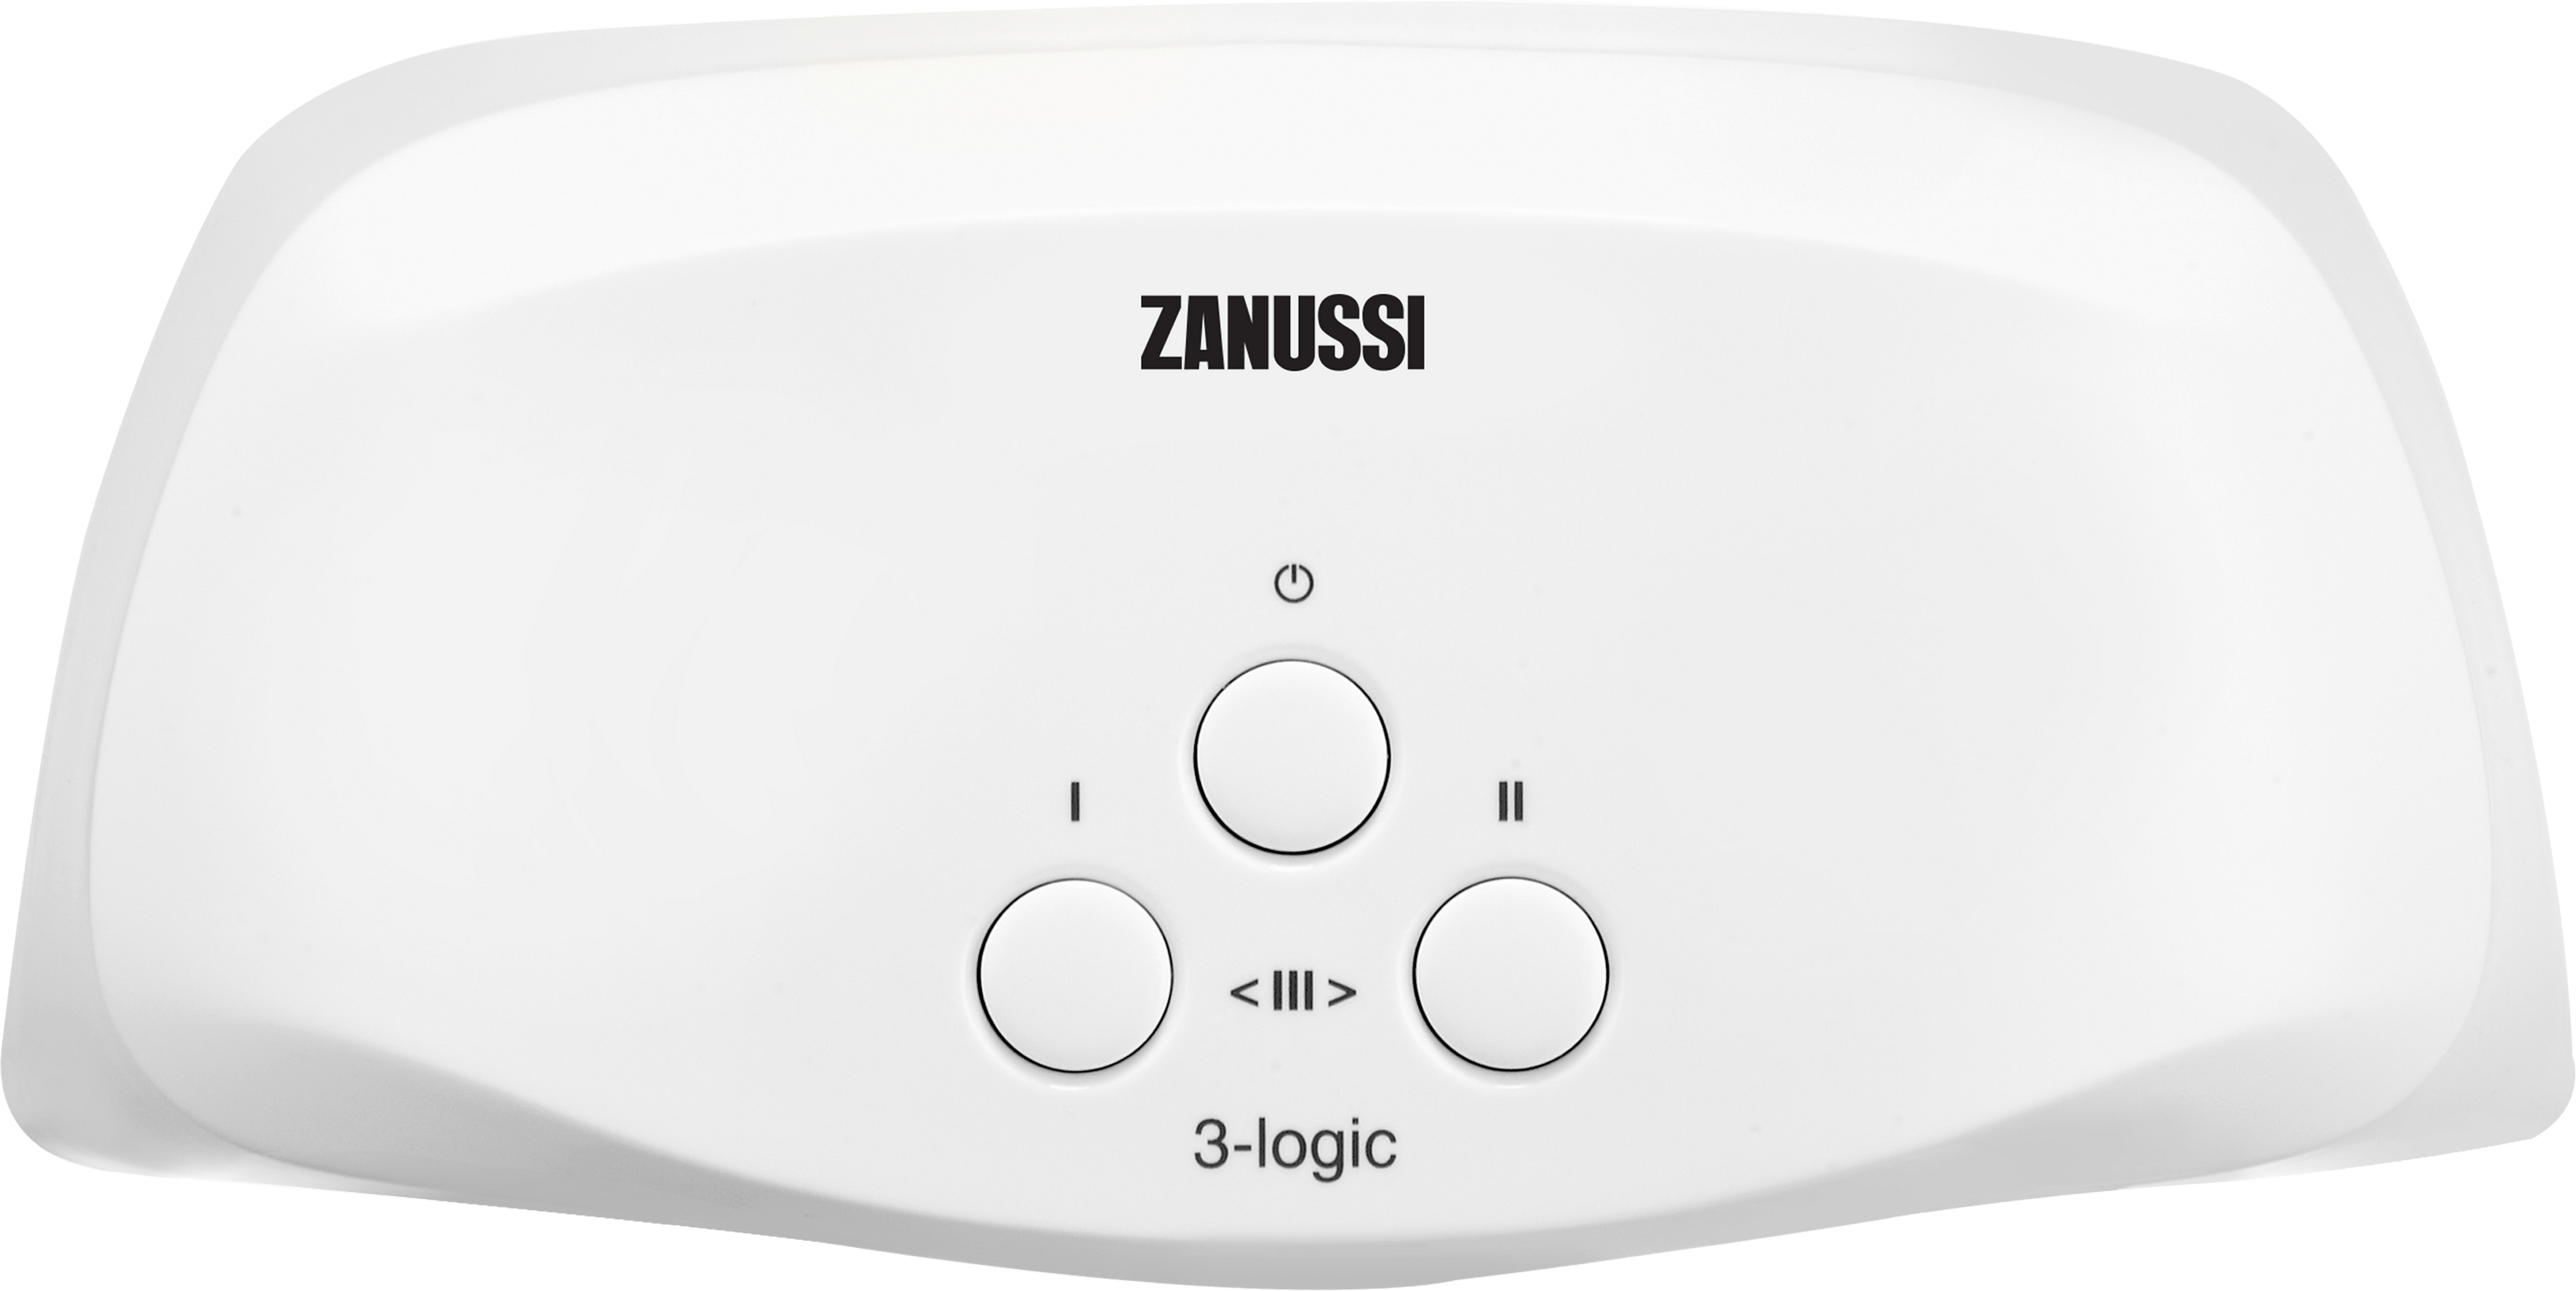 Отзывы кран zanussi водонагреватель Zanussi 3-logic T (3,5 кВт) в Украине